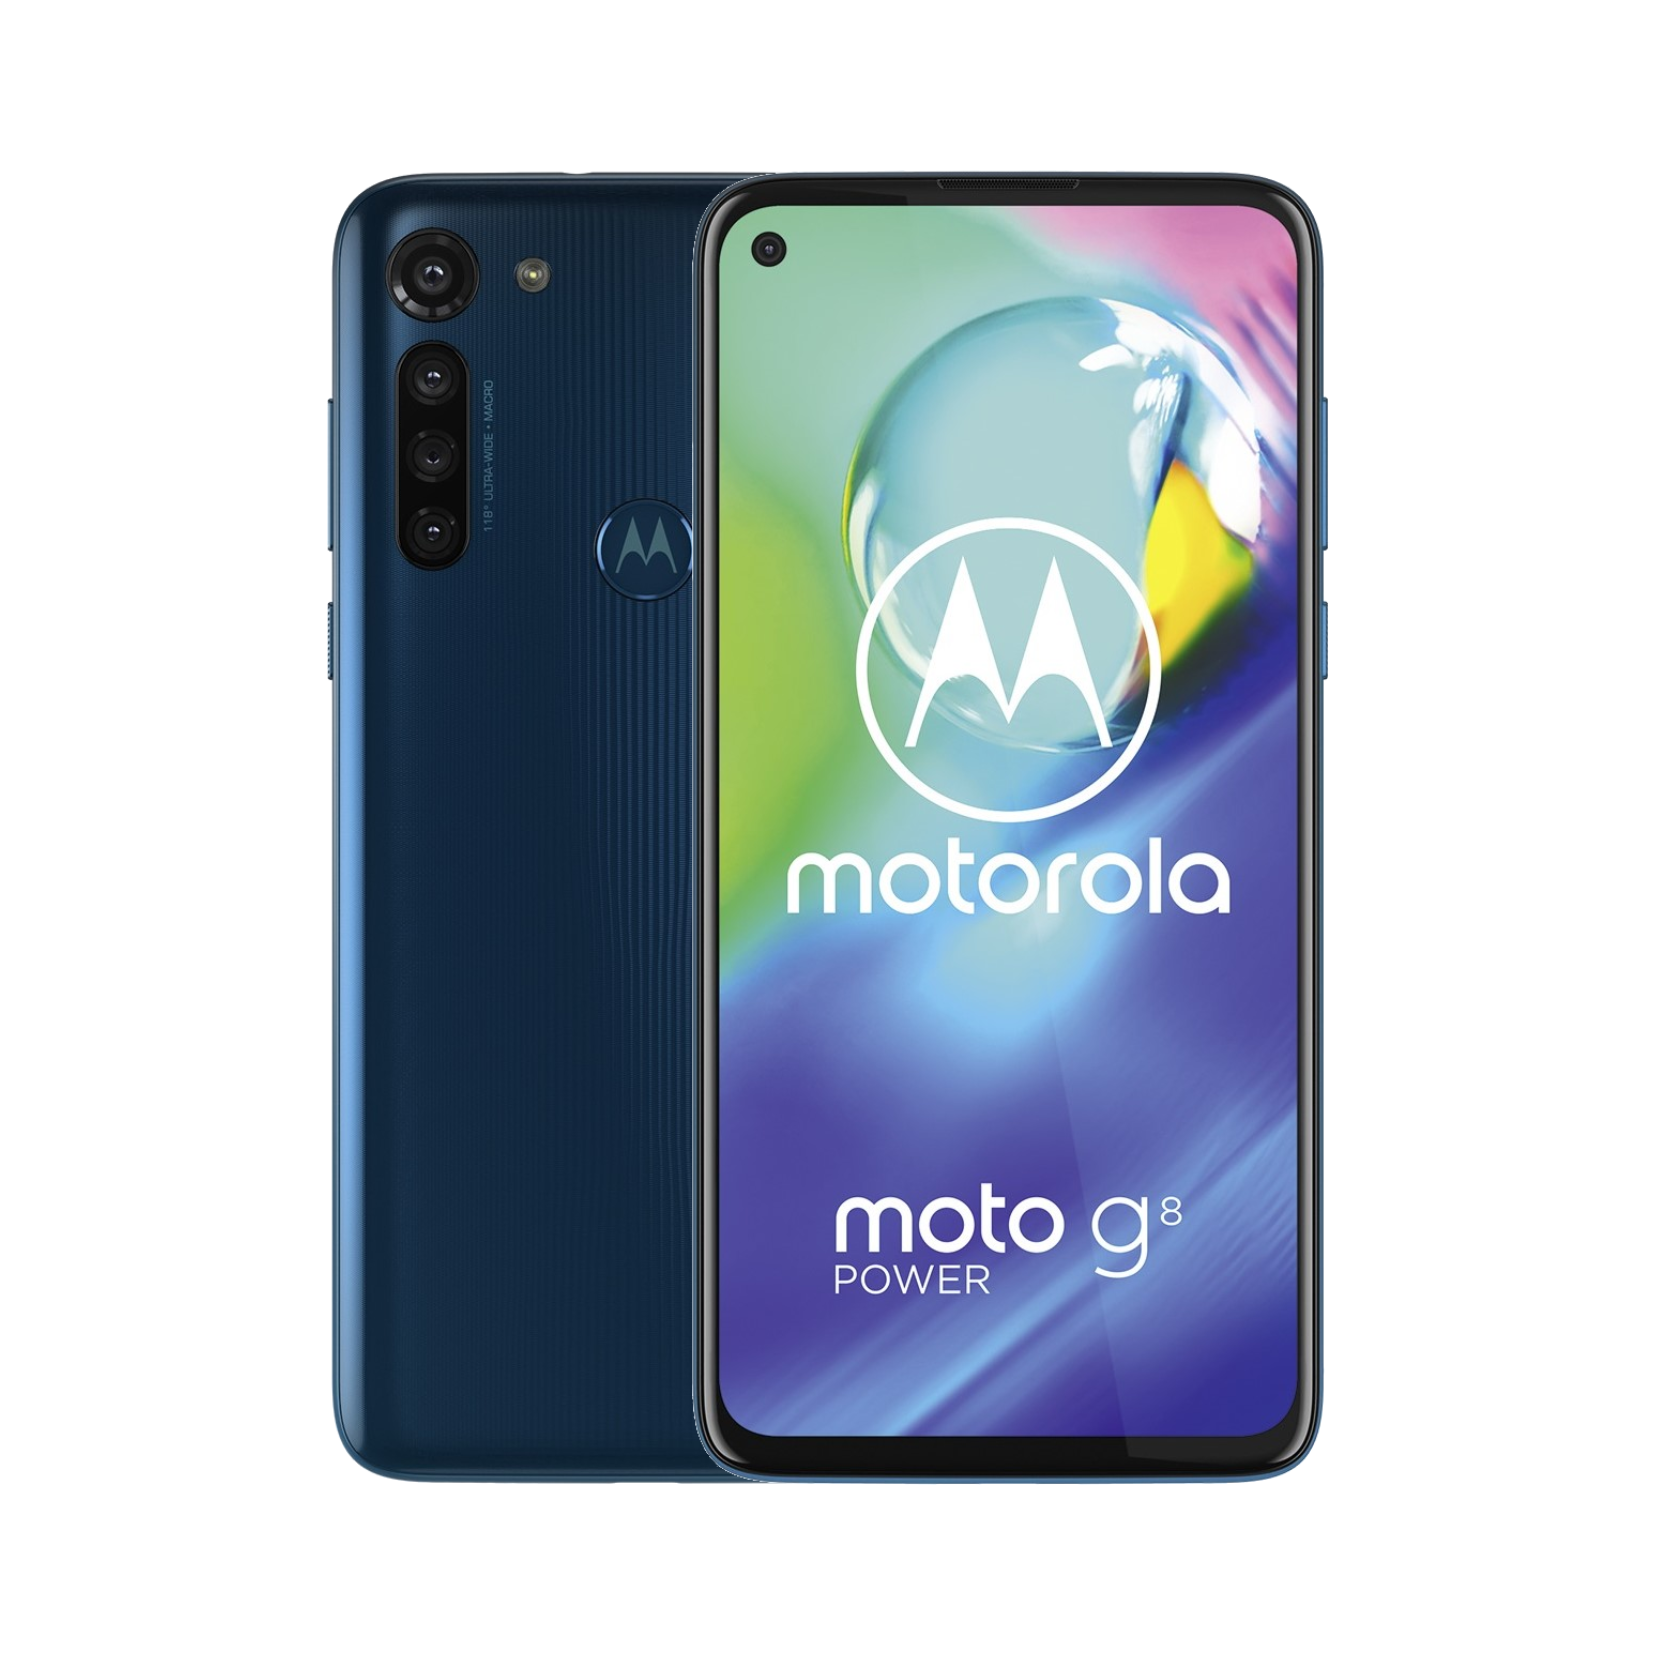 Motorola Moto G8 Power - Very Good Condition